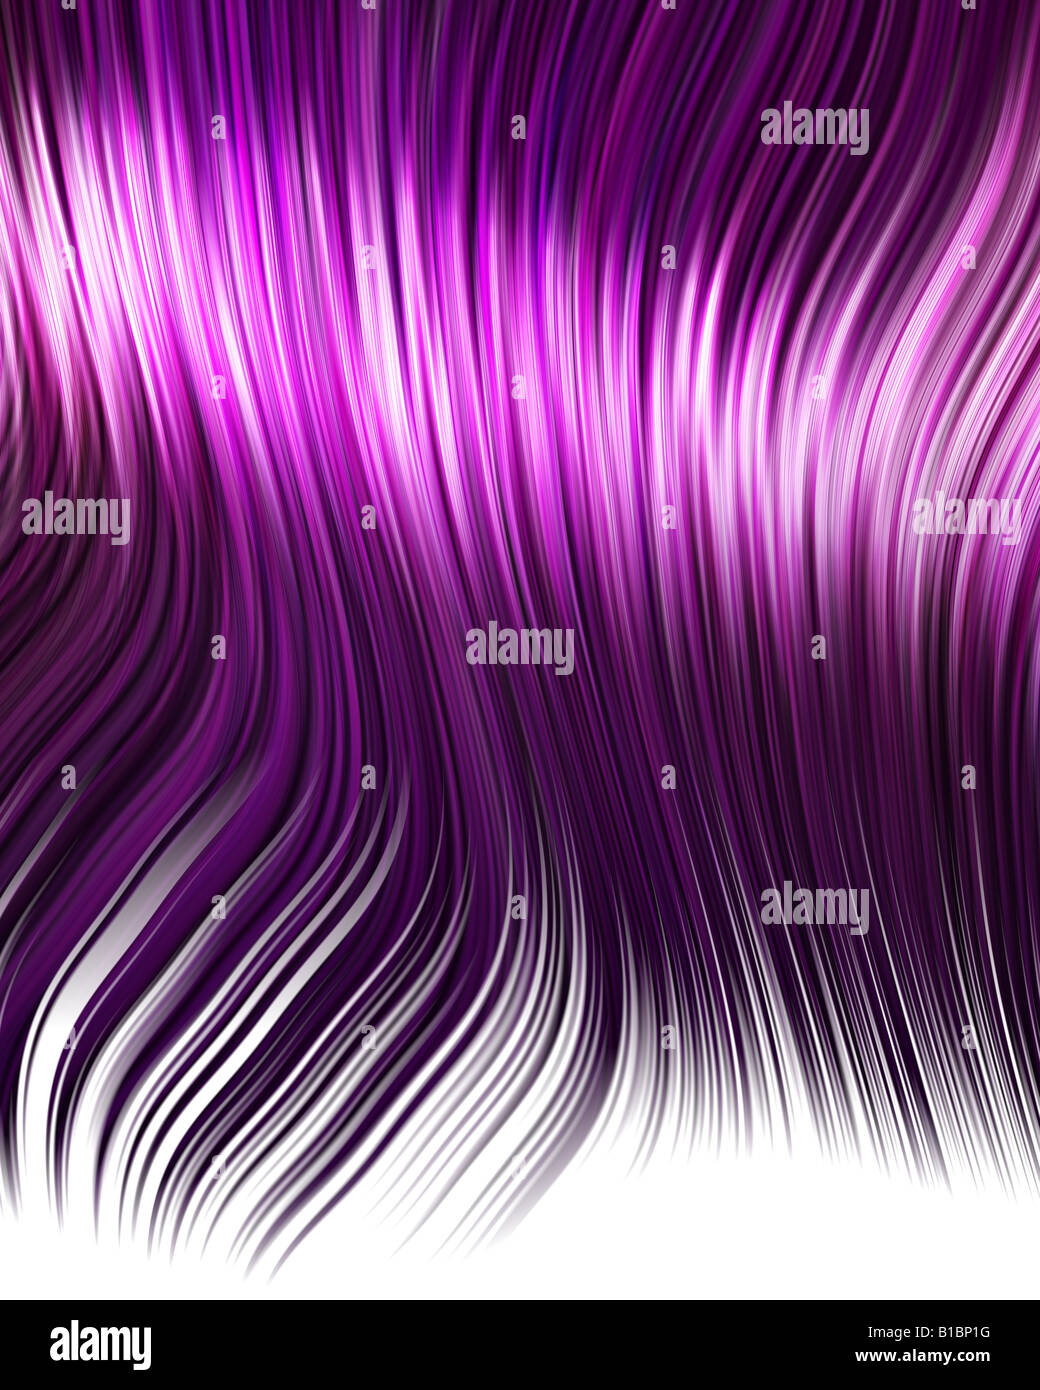 purple hair in an anime cartoon style Stock Photo